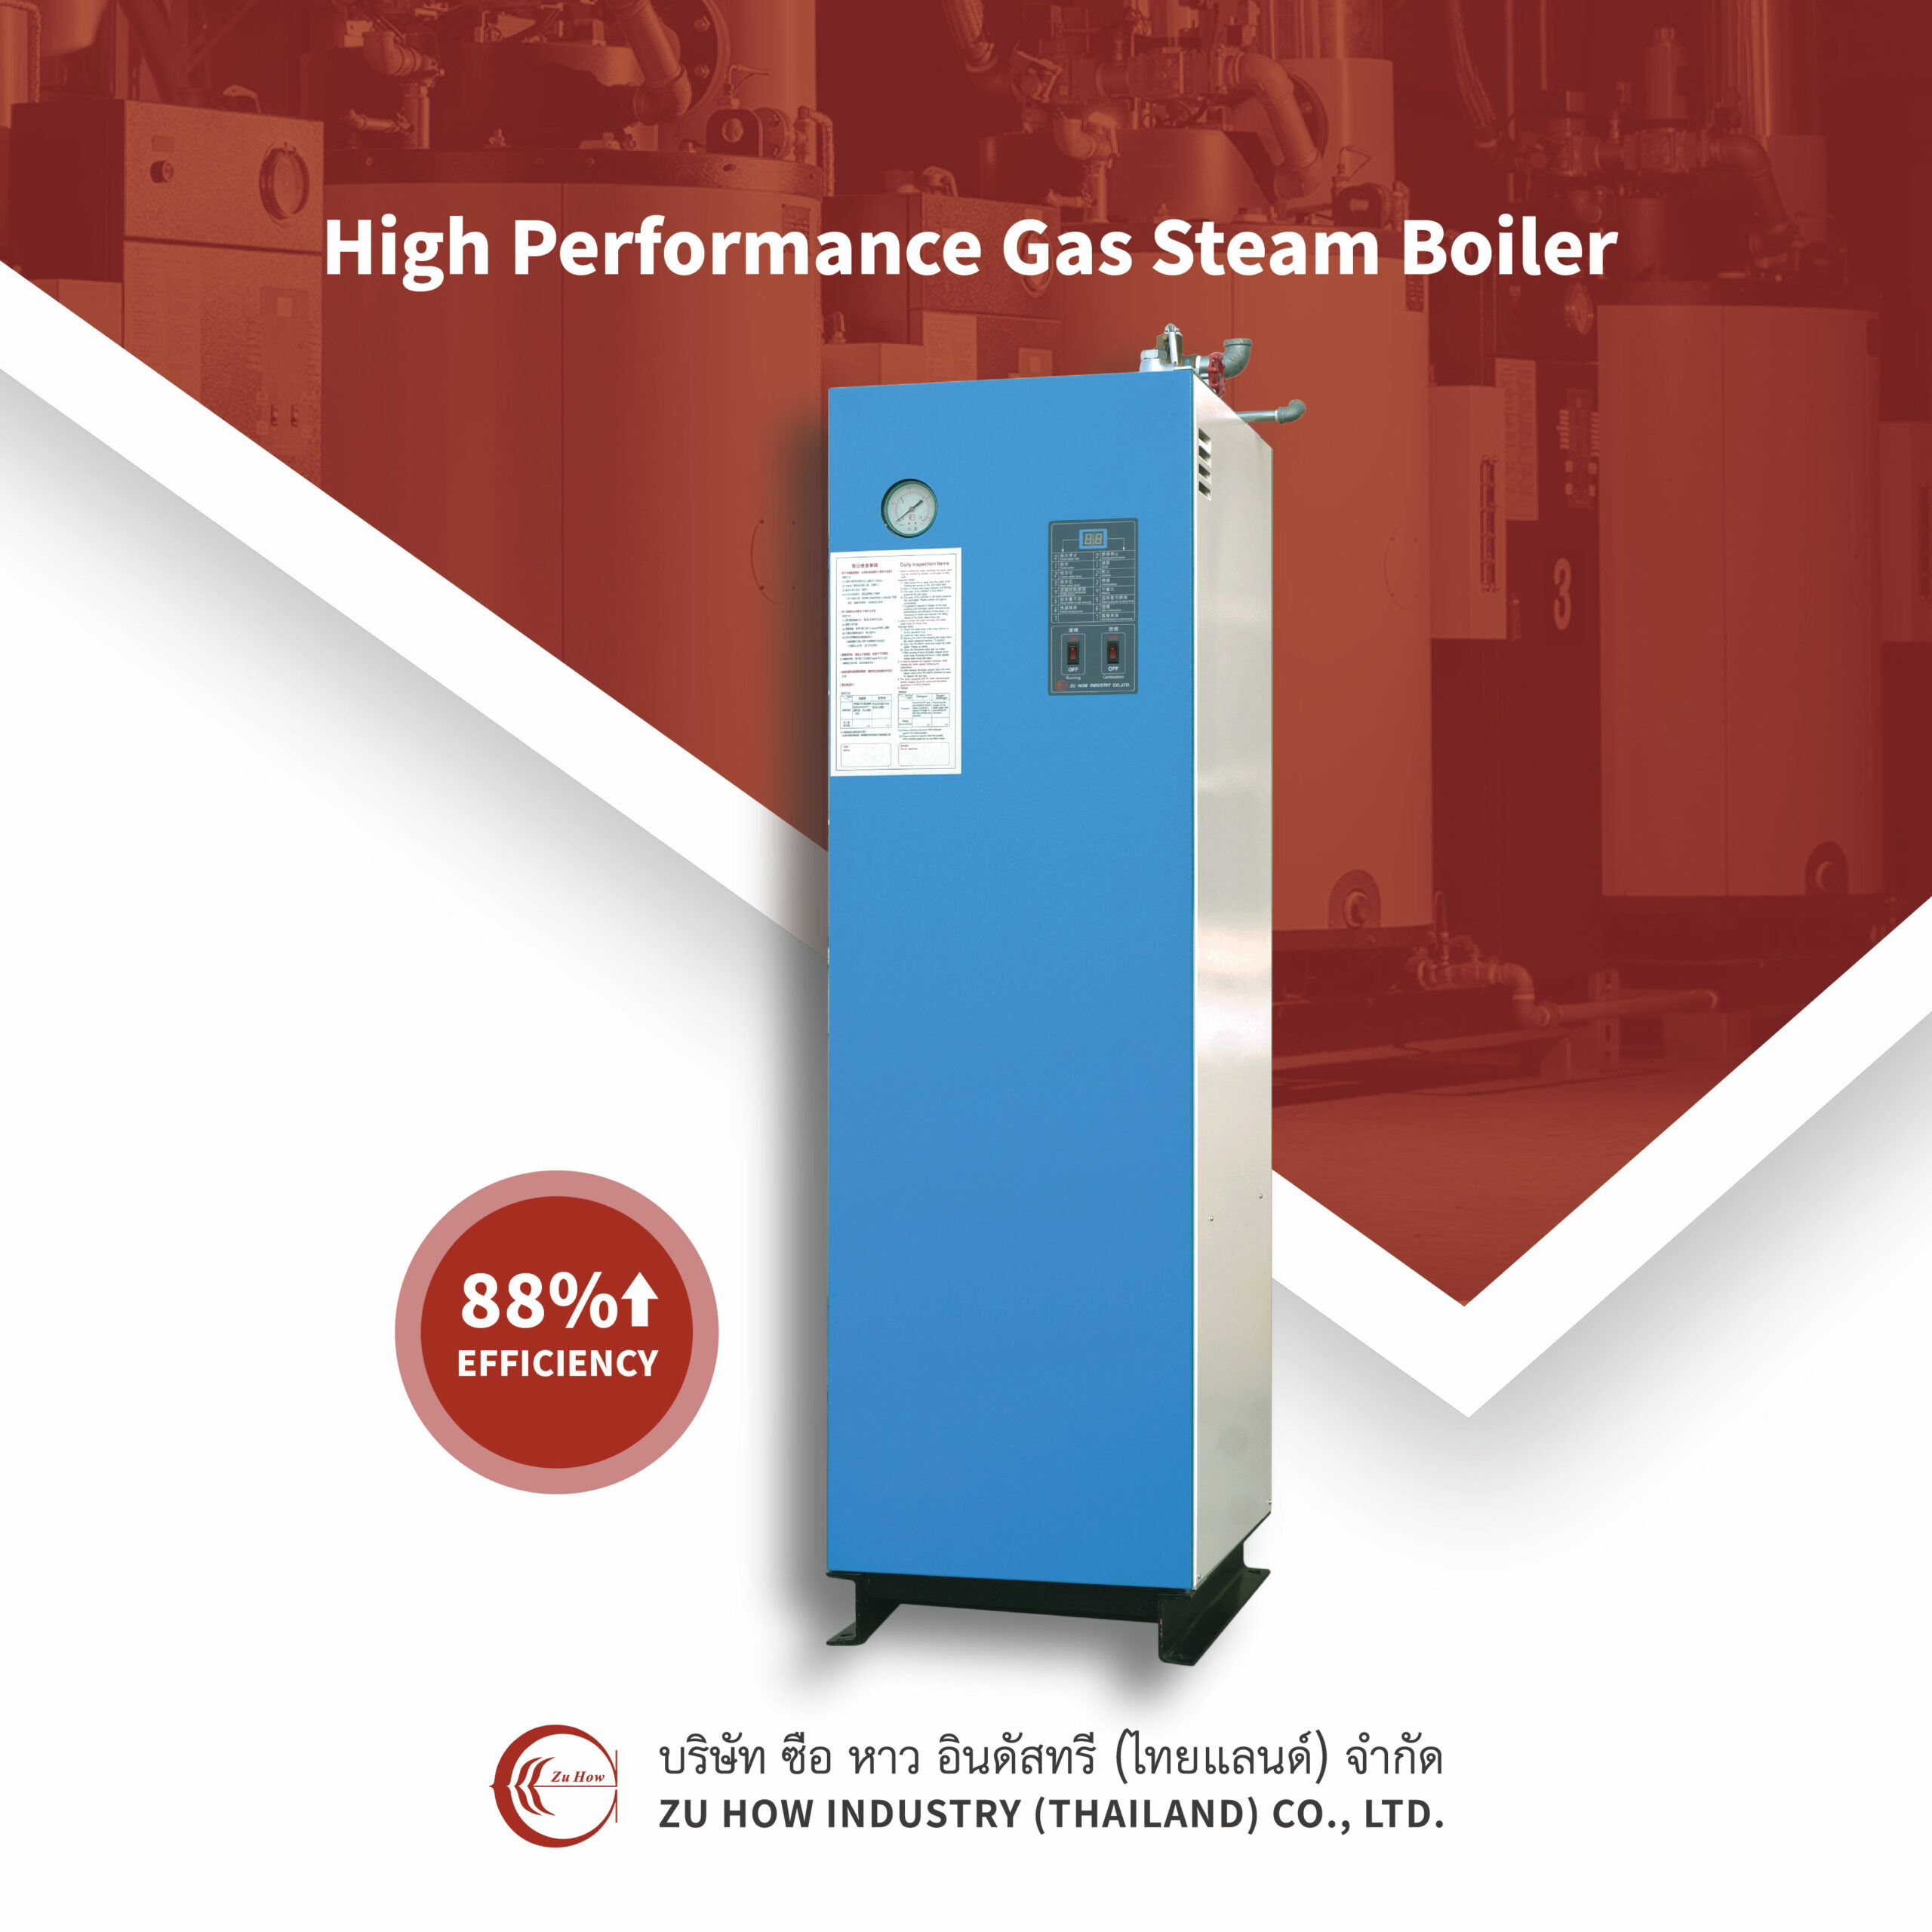 High Performance Gas Steam Boiler